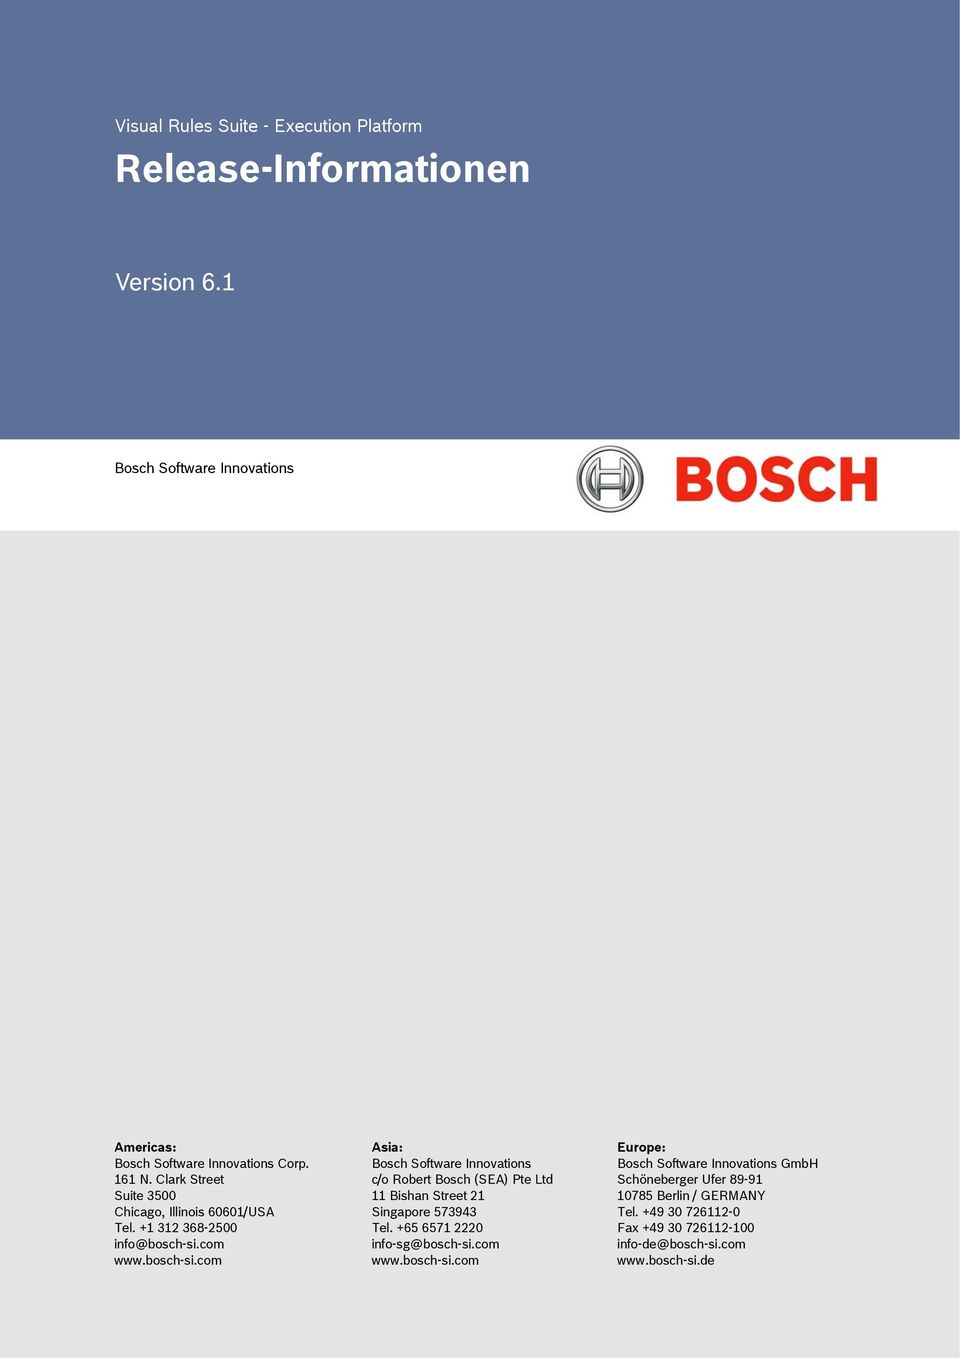 com www.bosch-si.com Asia: Bosch Software Innovations c/o Robert Bosch (SEA) Pte Ltd 11 Bishan Street 21 Singapore 573943 Tel.